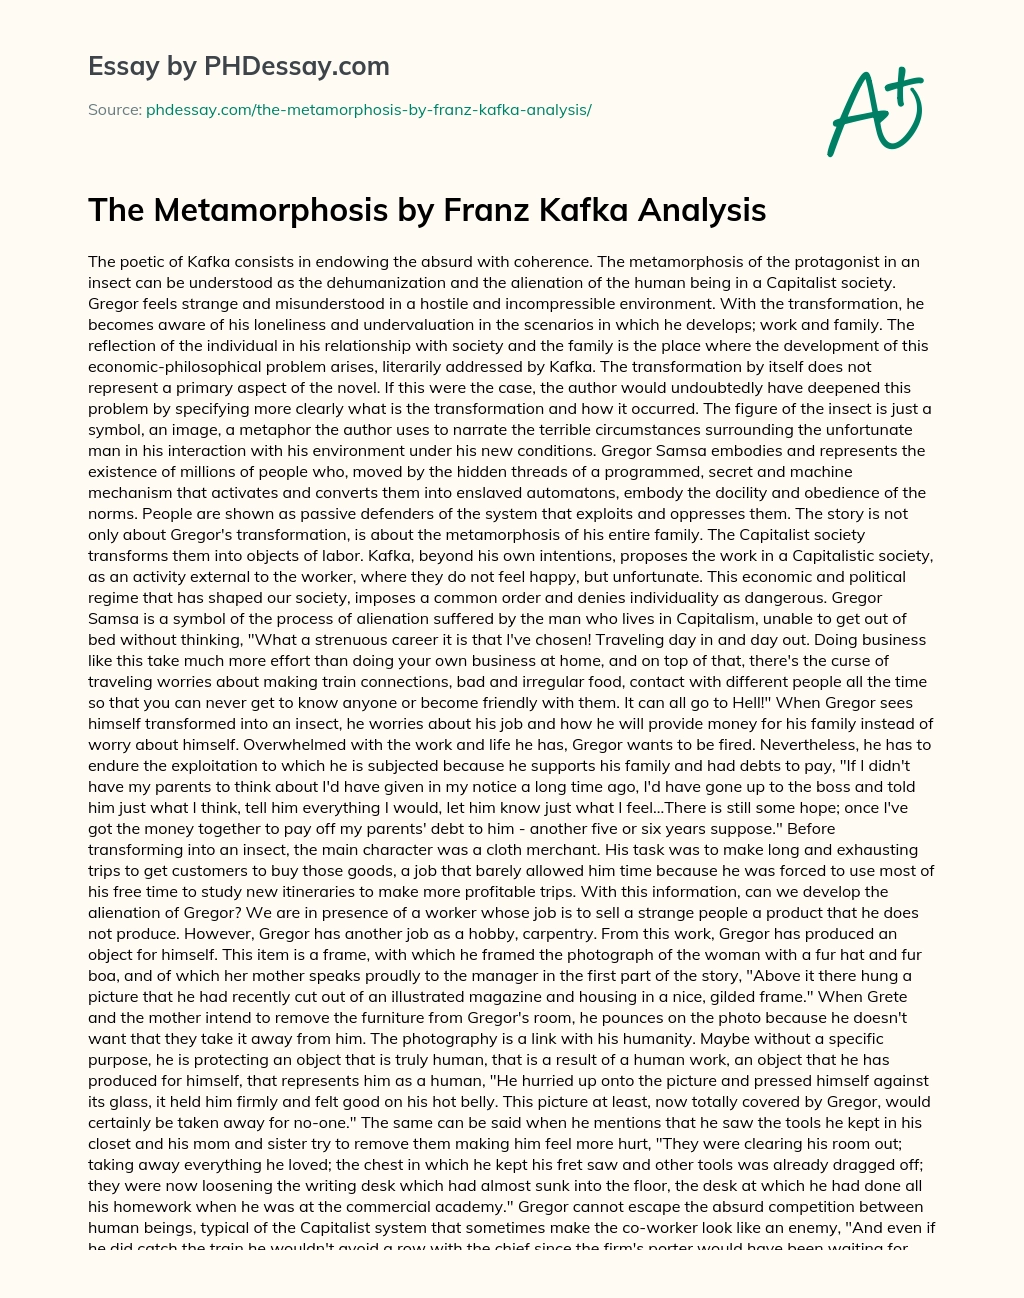 The Metamorphosis by Franz Kafka Analysis essay